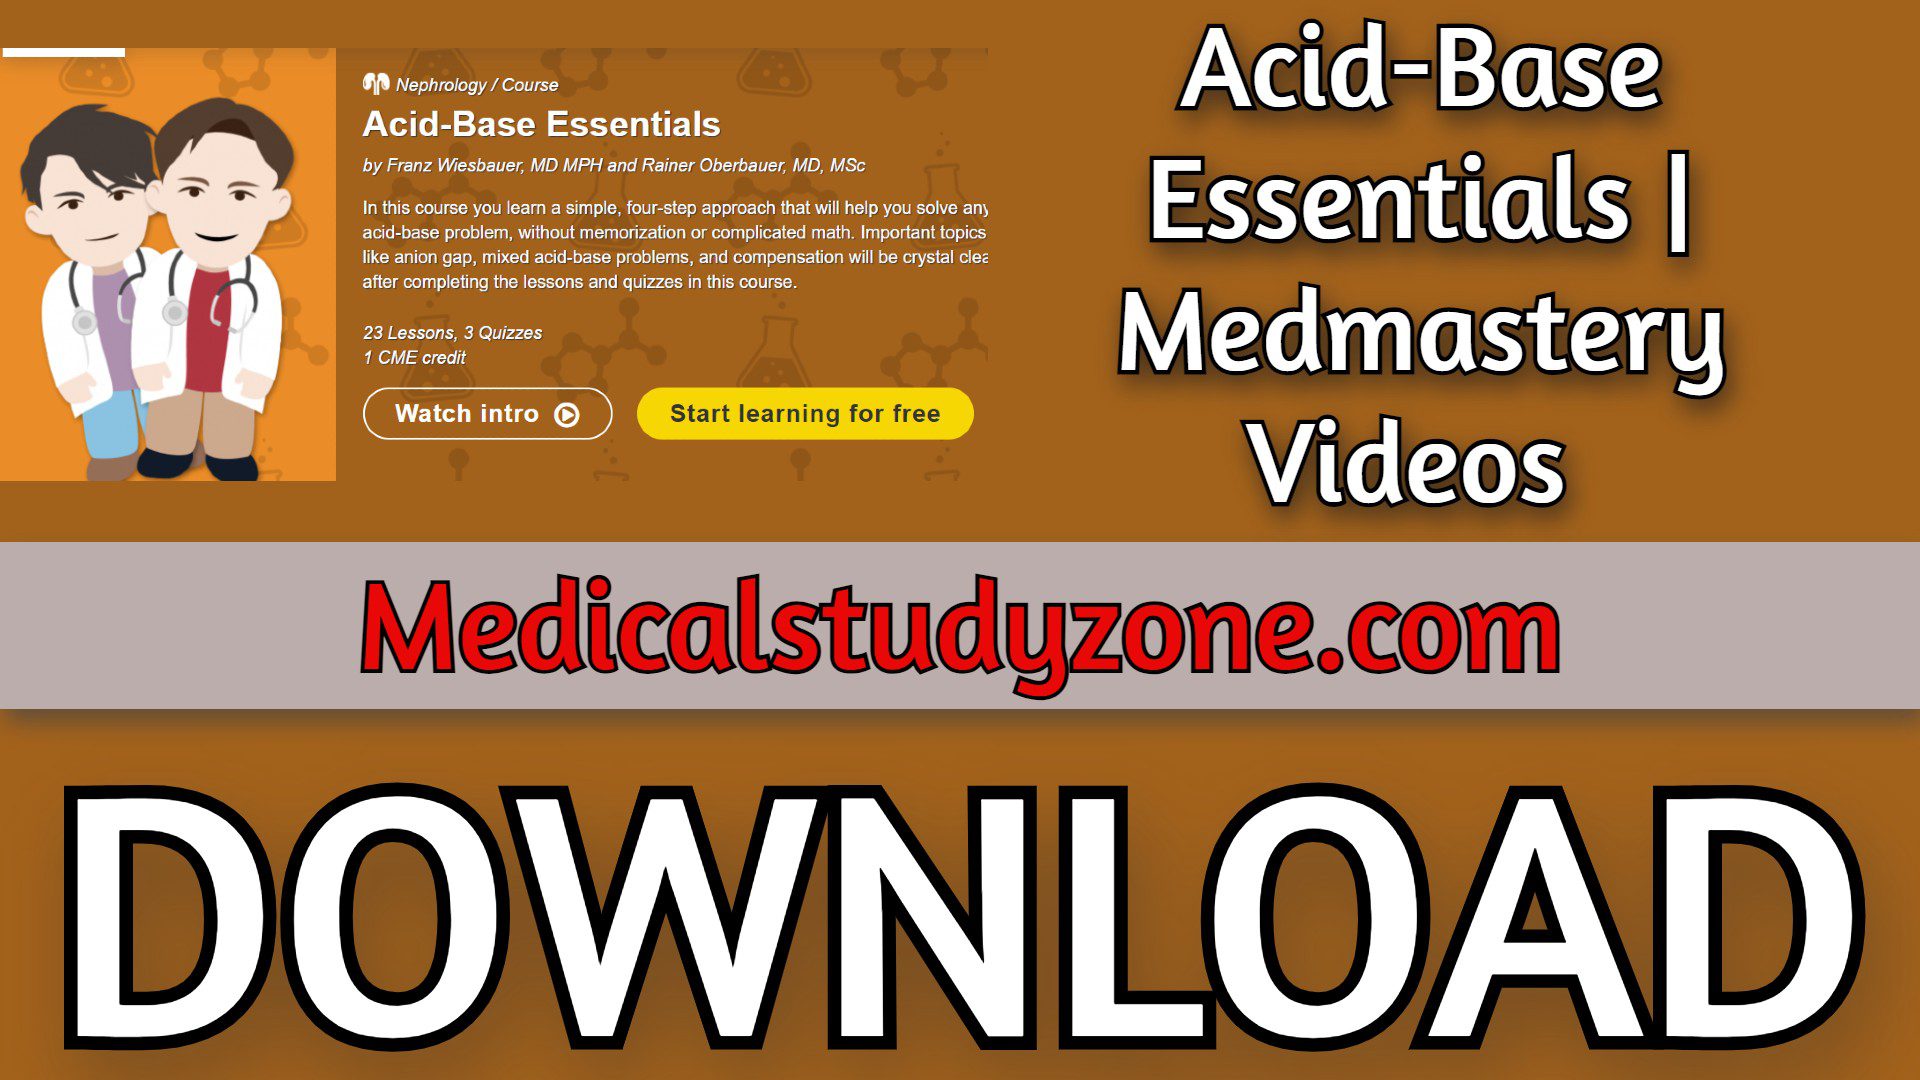 Acid-Base Essentials | Medmastery 2021 Videos Free Download